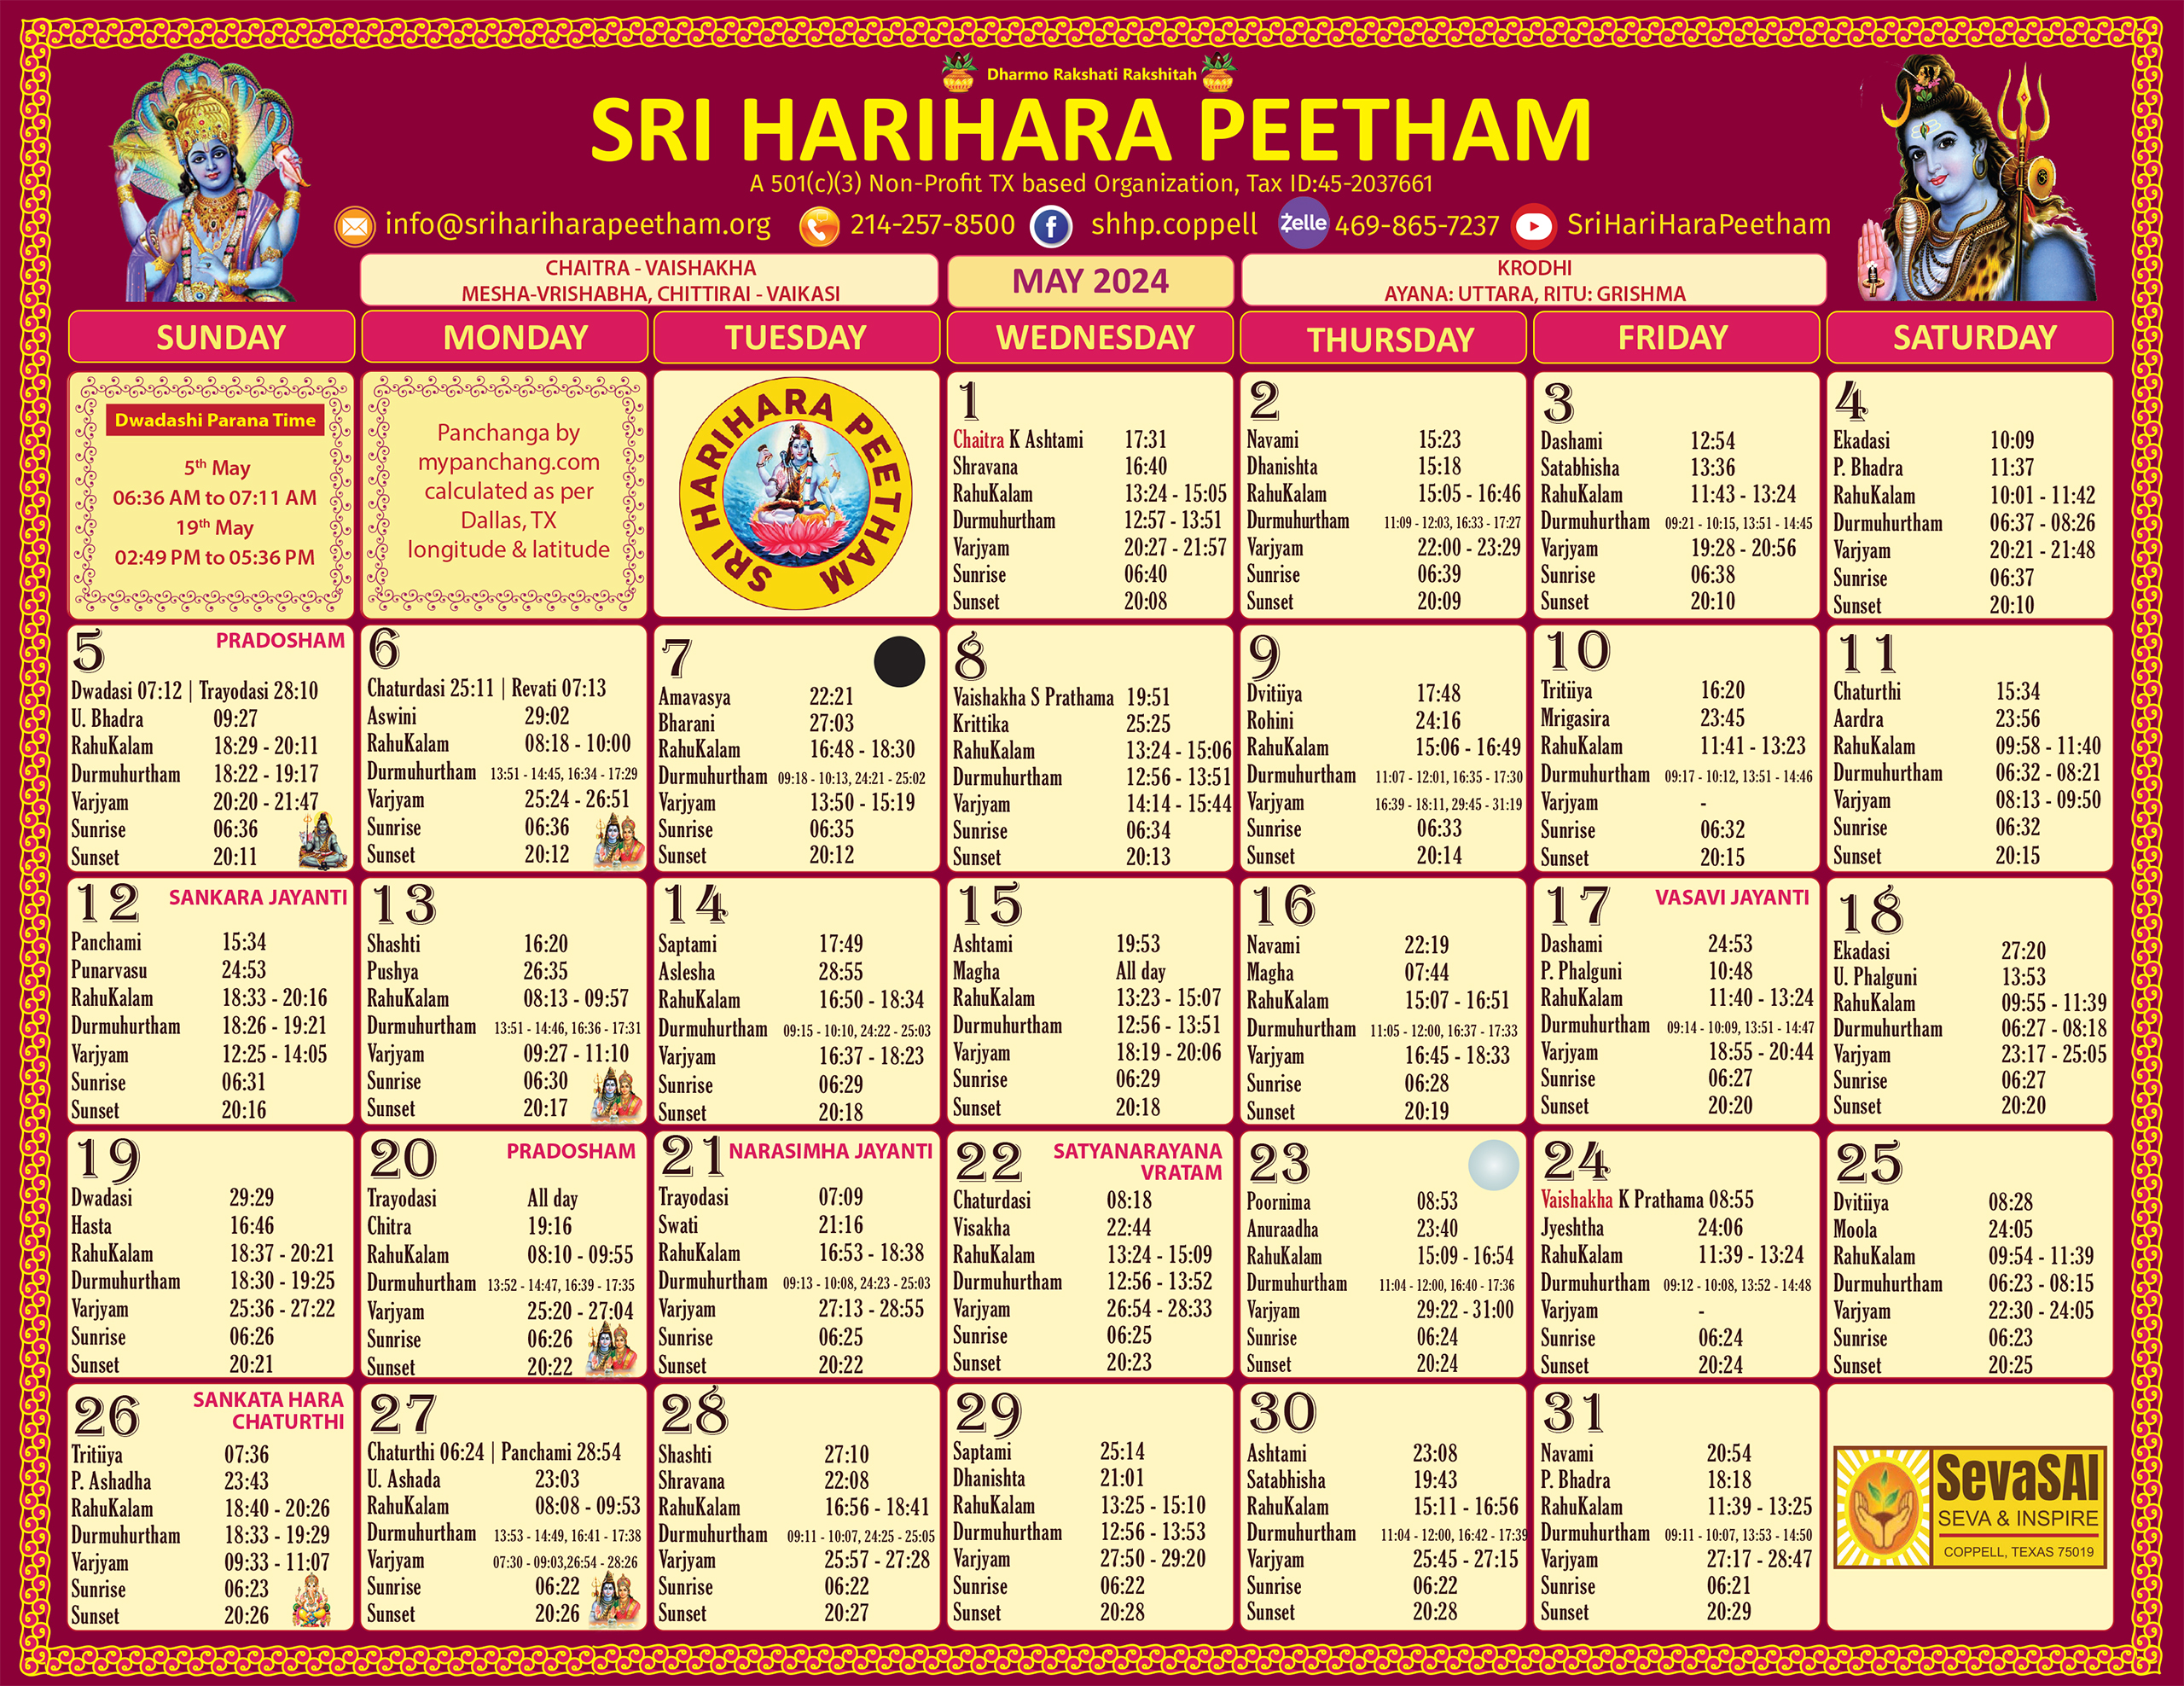 Sri HariHara Peetham's May 2024 calendar page